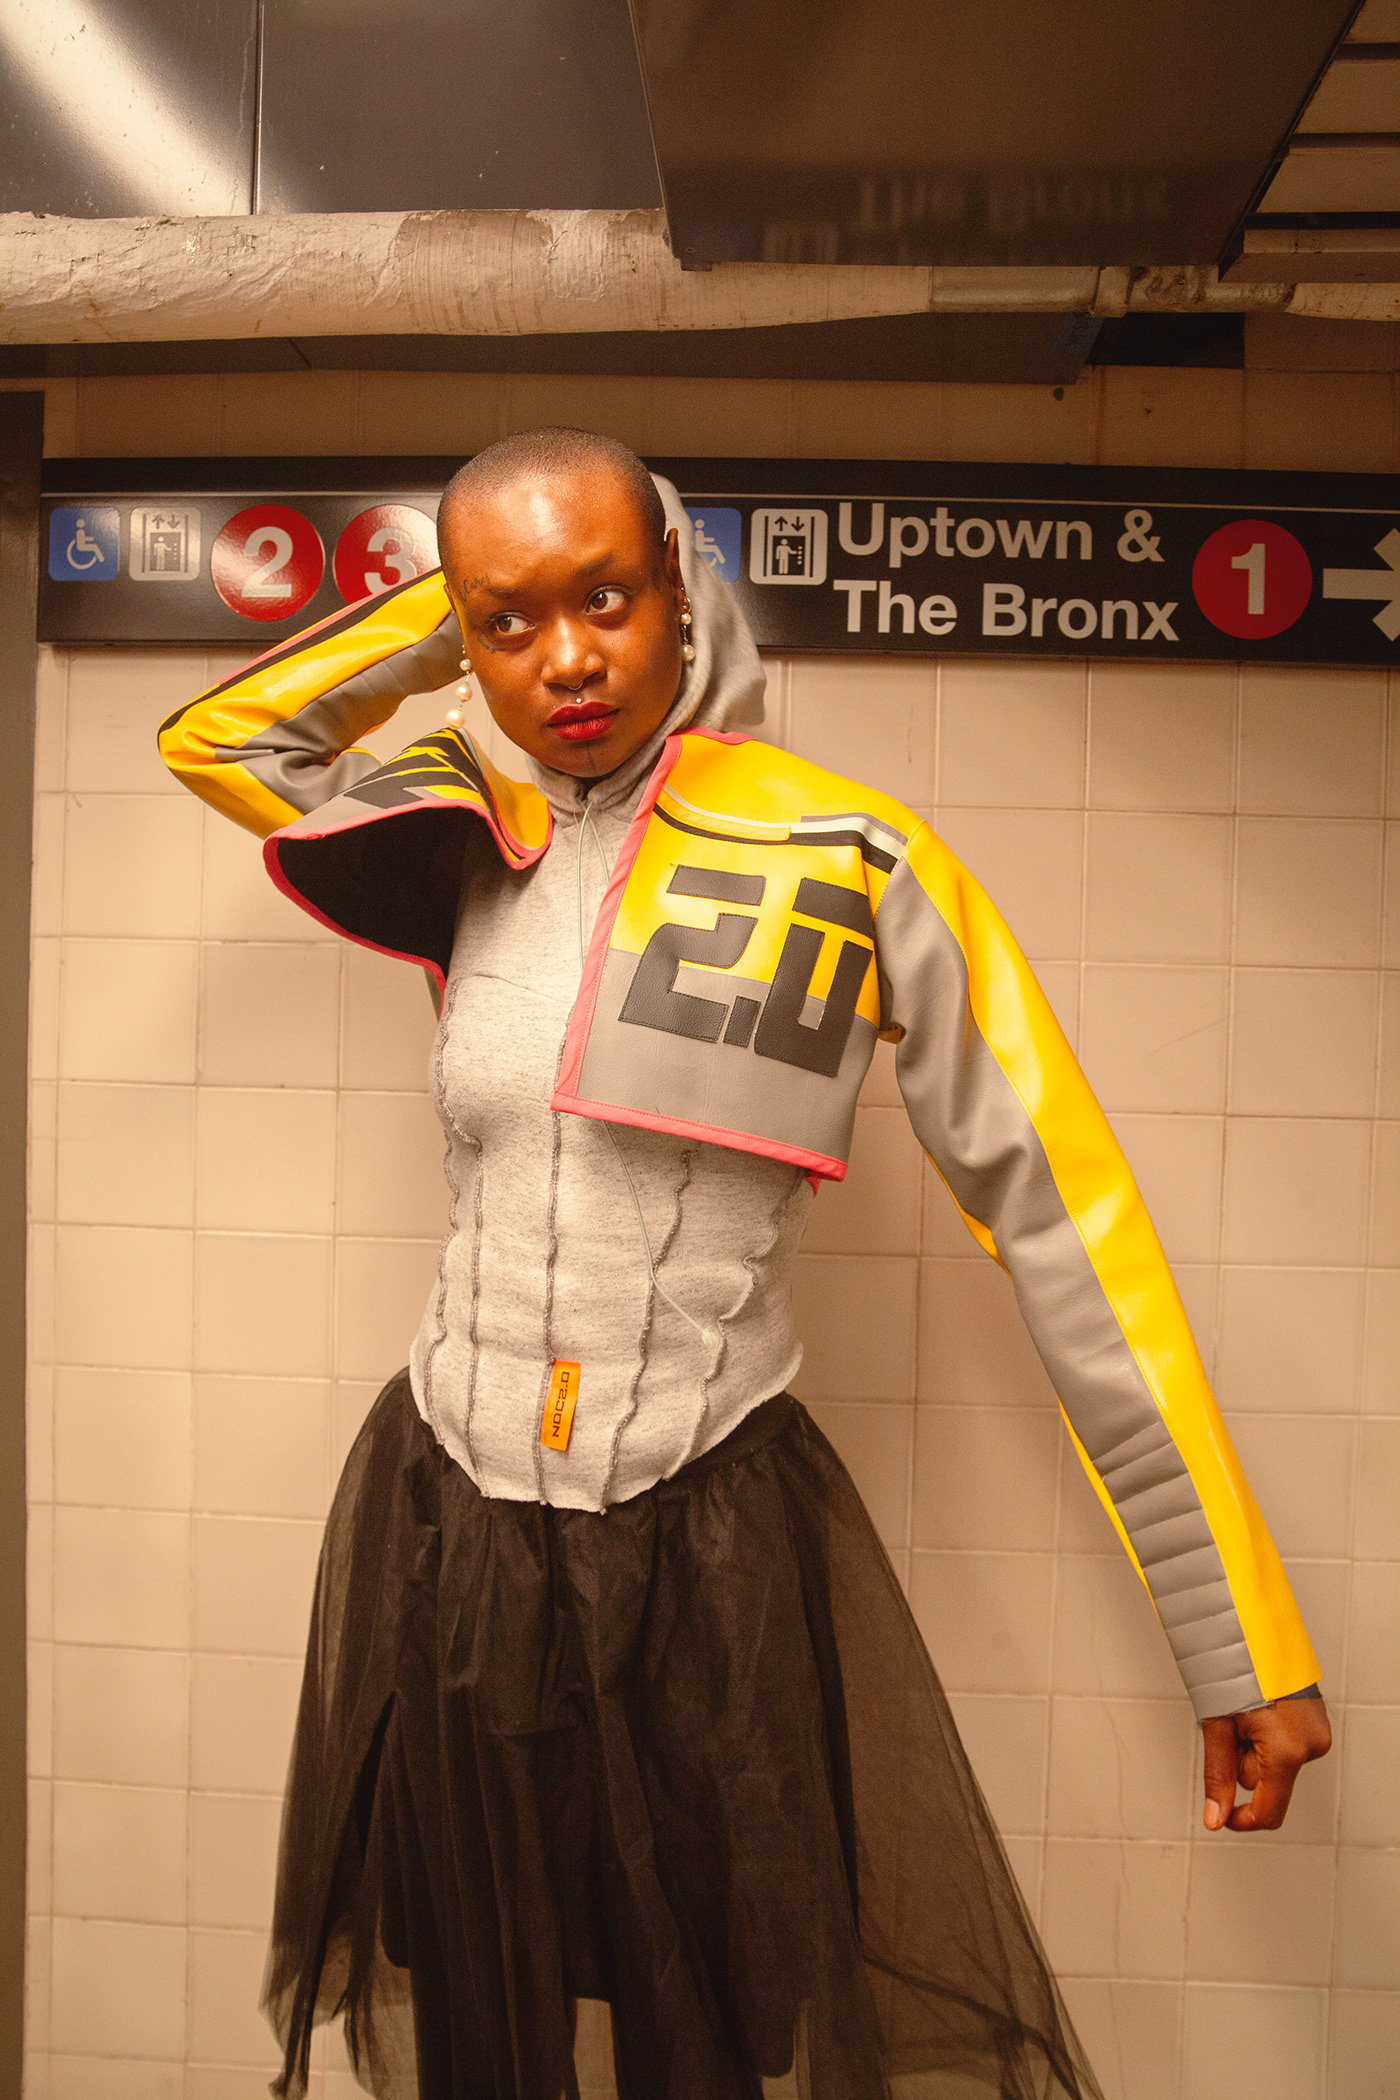 Clothing streetwear fashion design newyork pattern making subway station city street photography